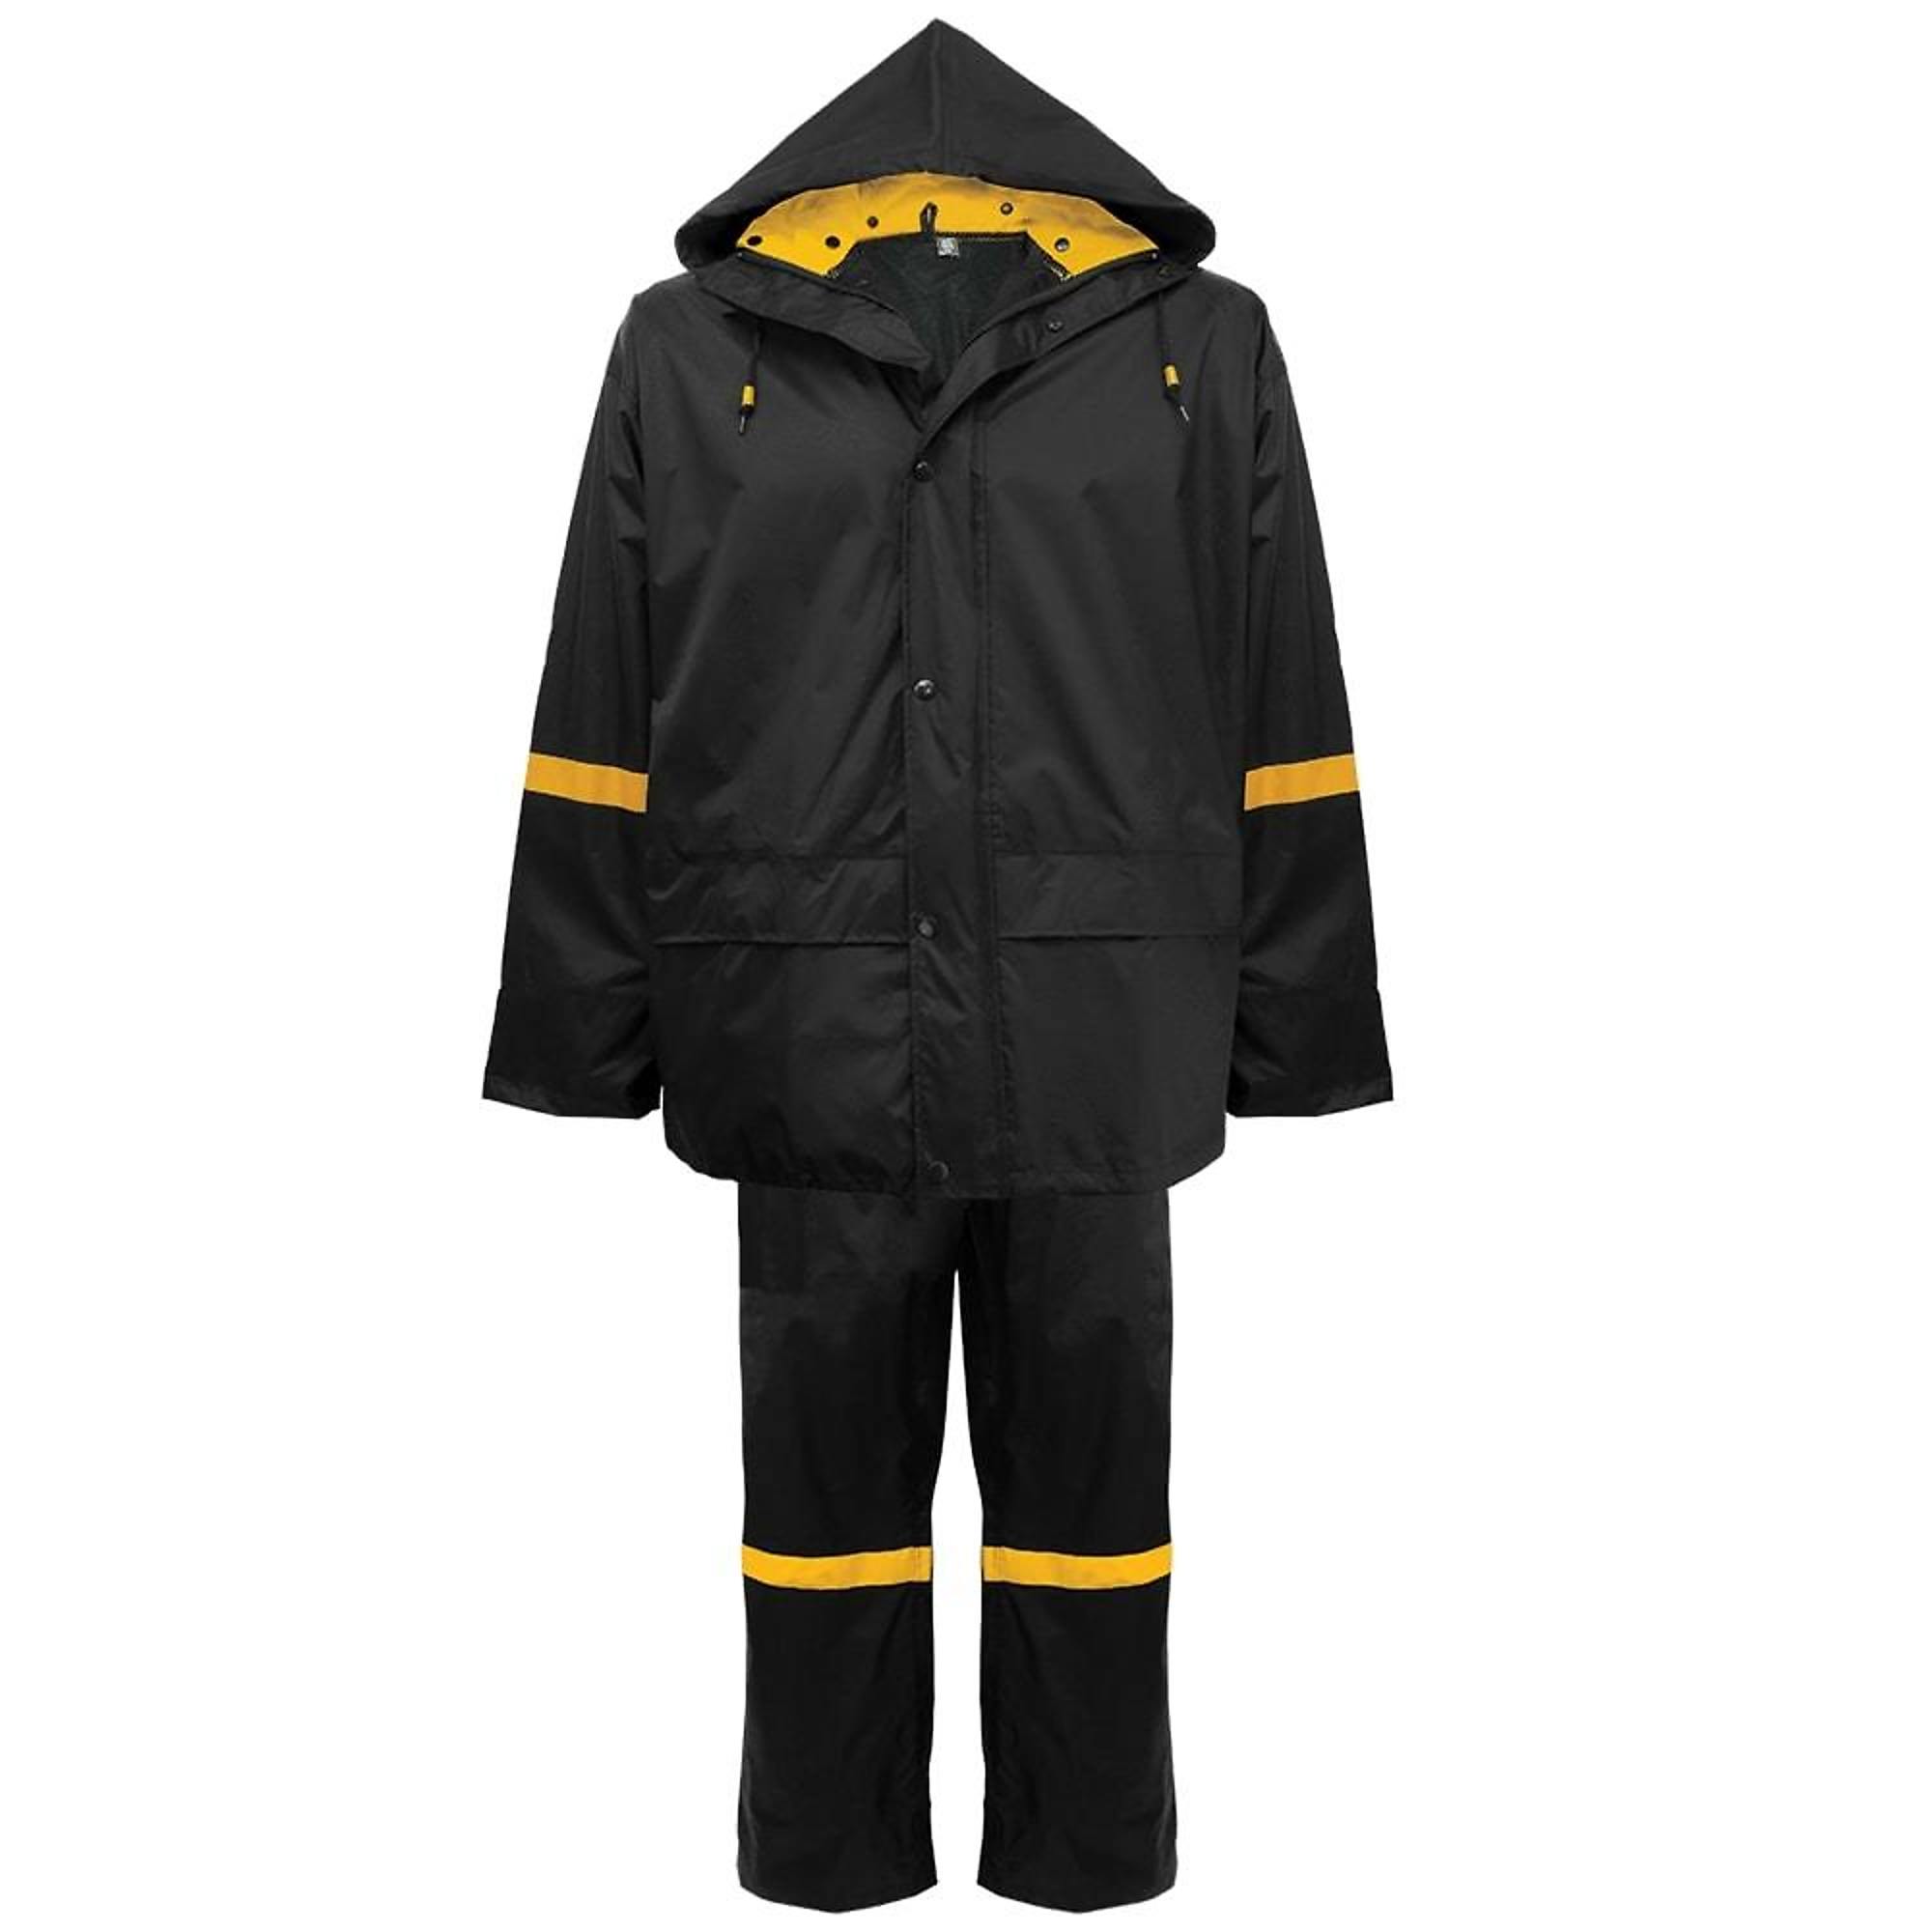 FrogWear, Black, PVC Coated, Nylon Three-Piece Rain Suit, Size 5XL, Color Black/Yellow, Model R6400-5XL